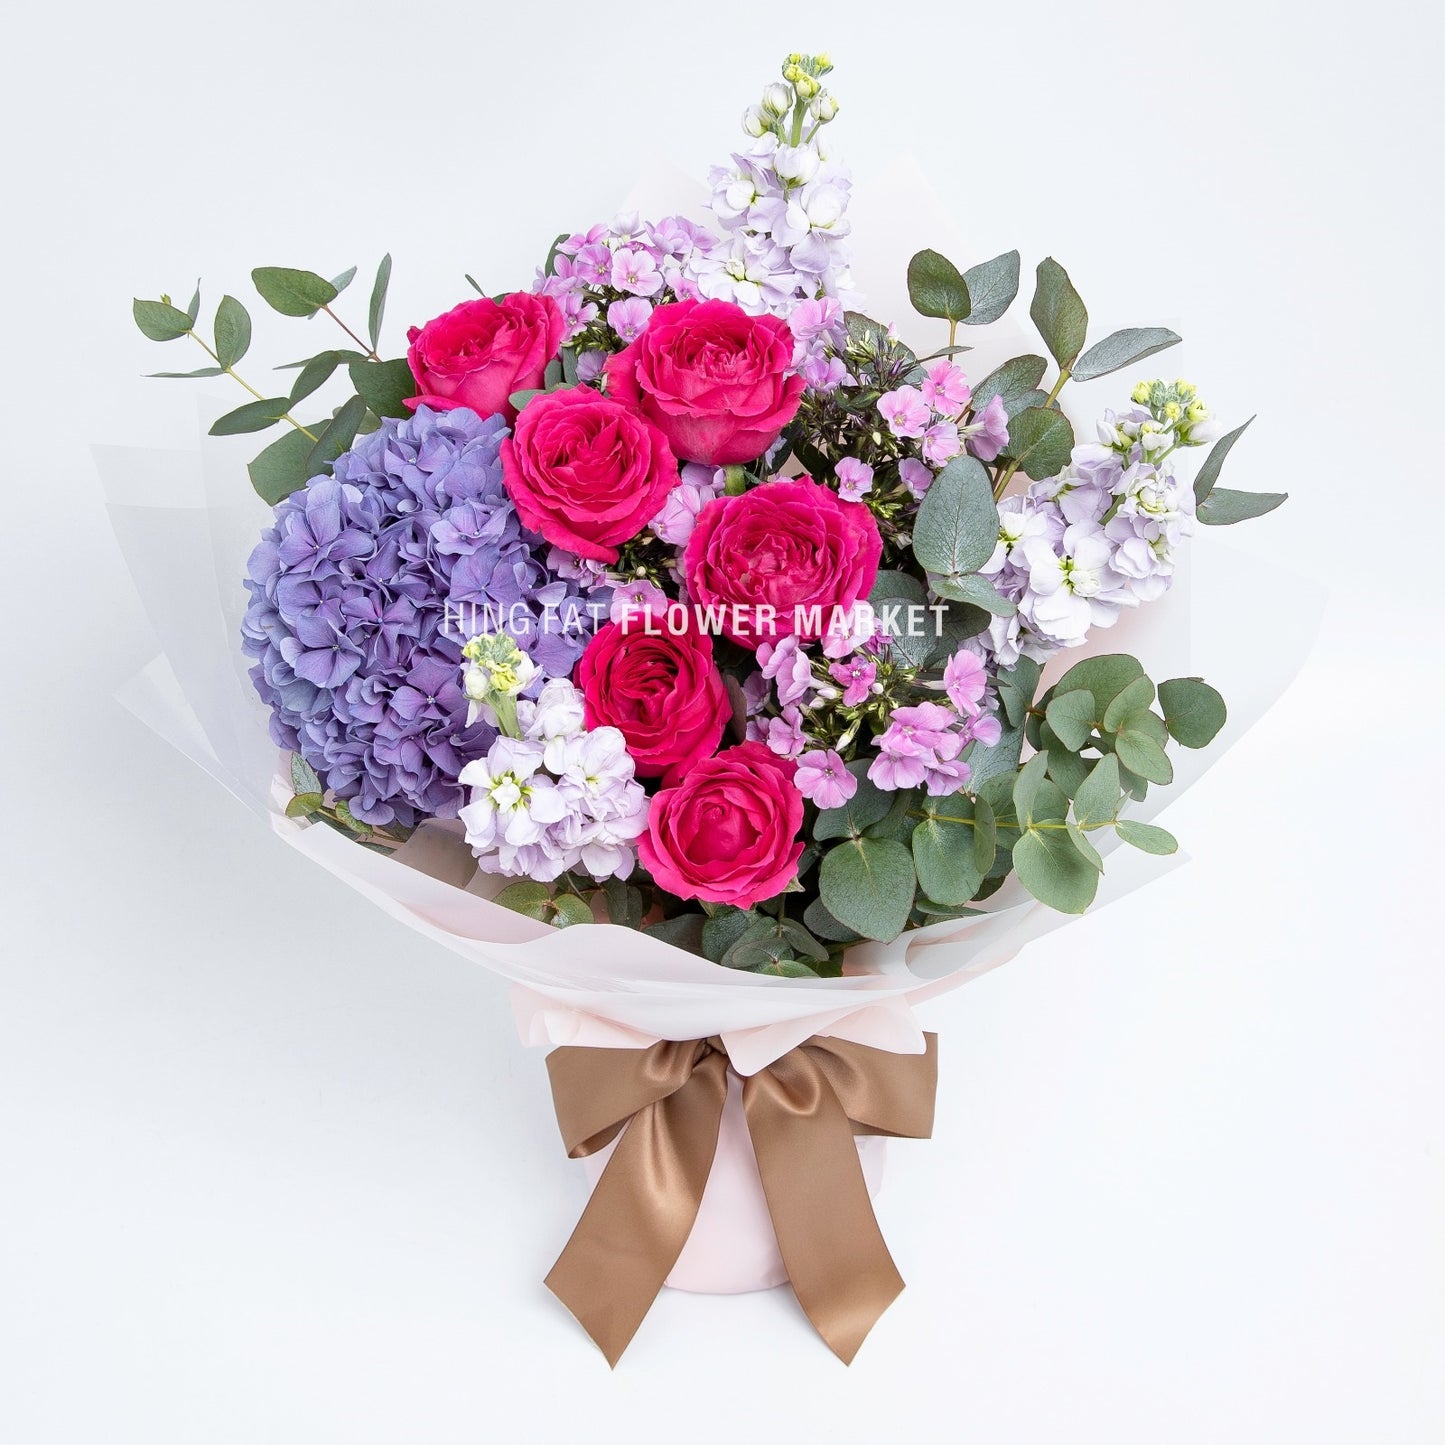 紫繡球玫瑰花束 Purple hydrangea and rose bouquet